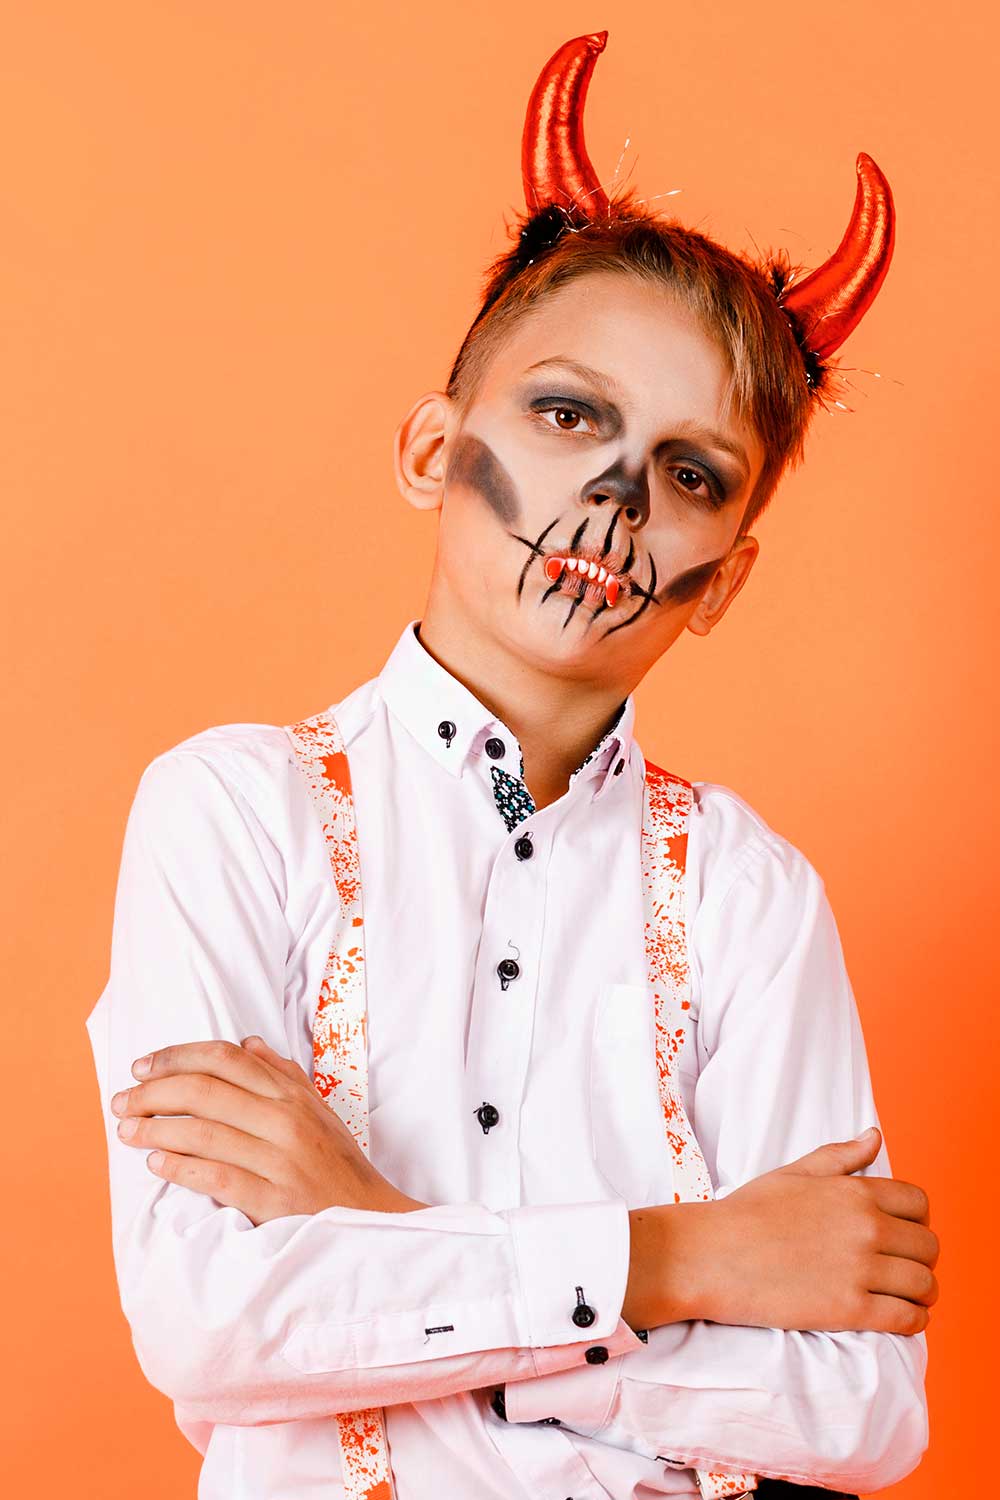 54 Of The Best Parent & Child Halloween Costume Ideas Ever | Bored Panda